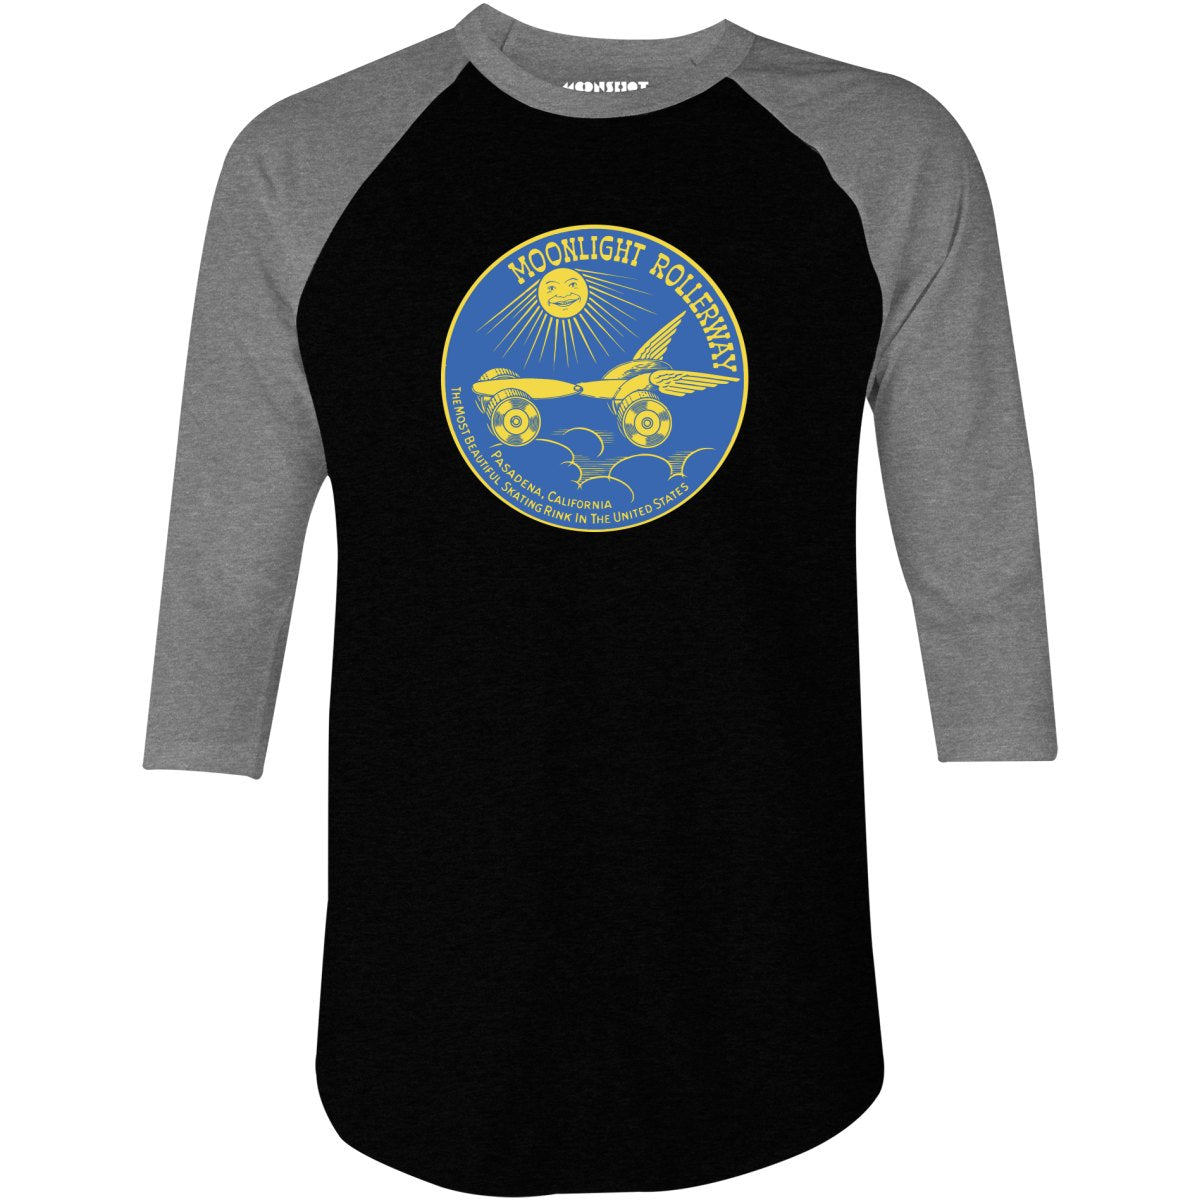 Moonlight Rollerway - Pasadena, CA - Vintage Roller Rink - 3/4 Sleeve Raglan T-Shirt